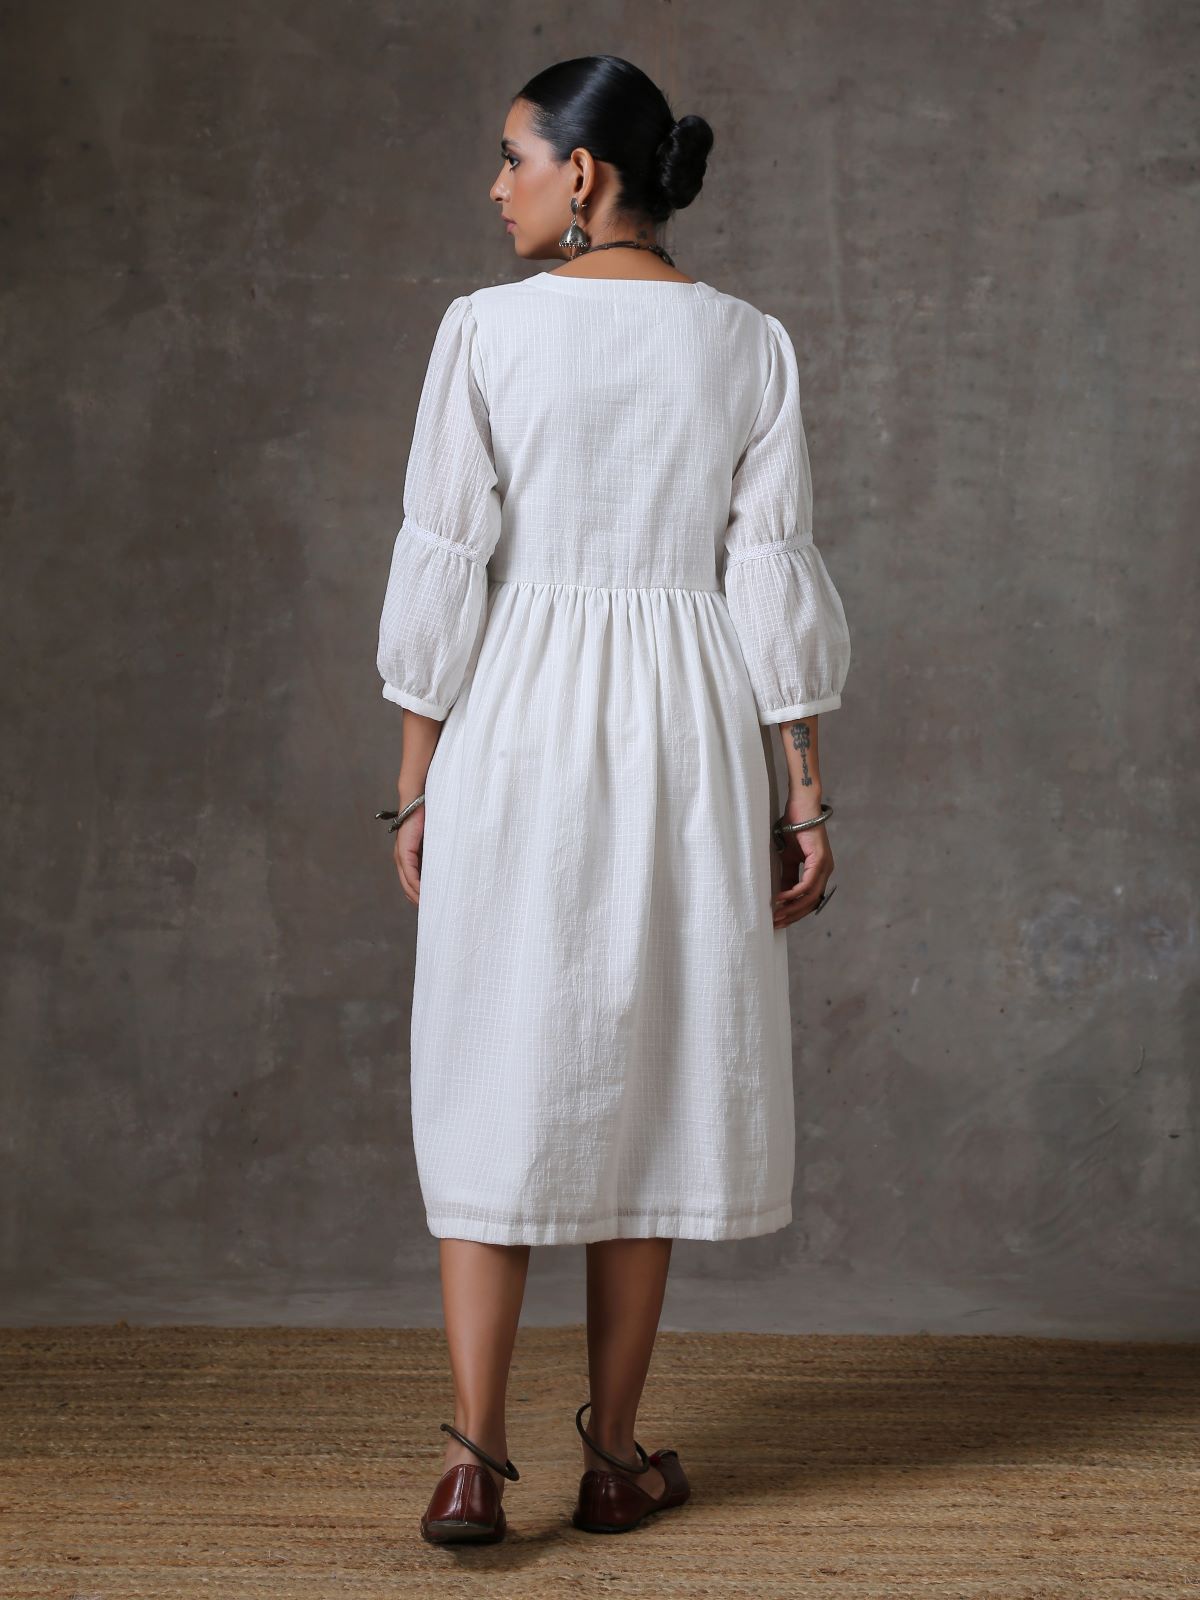 Luna- Deep neck white textured dress